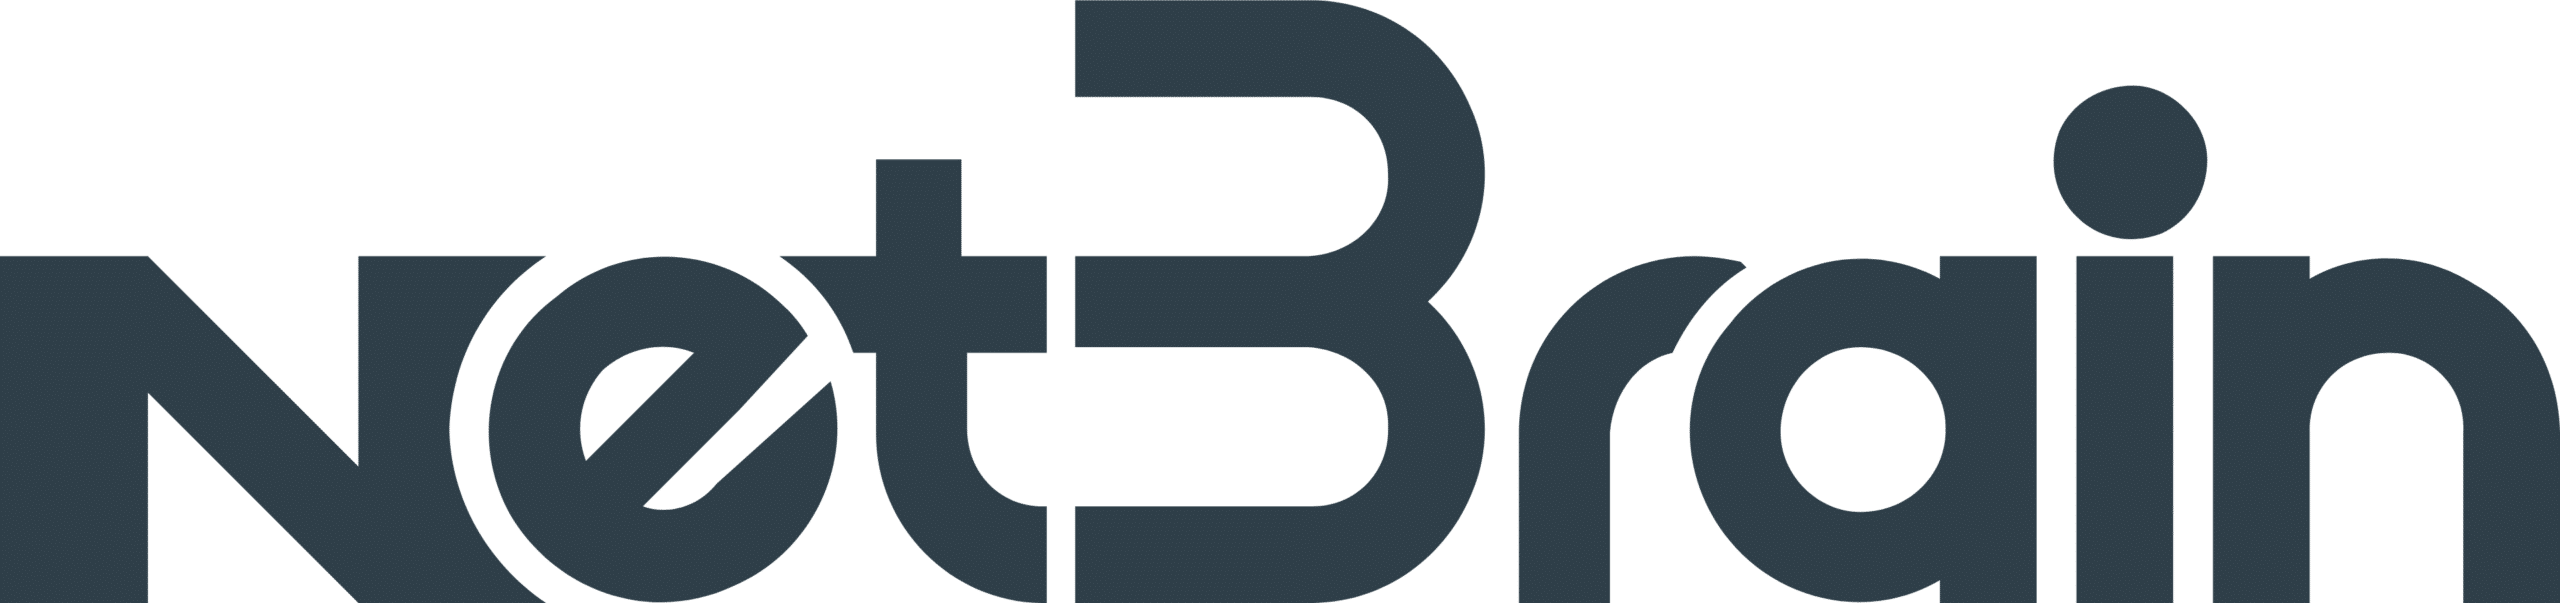 netbrain logo